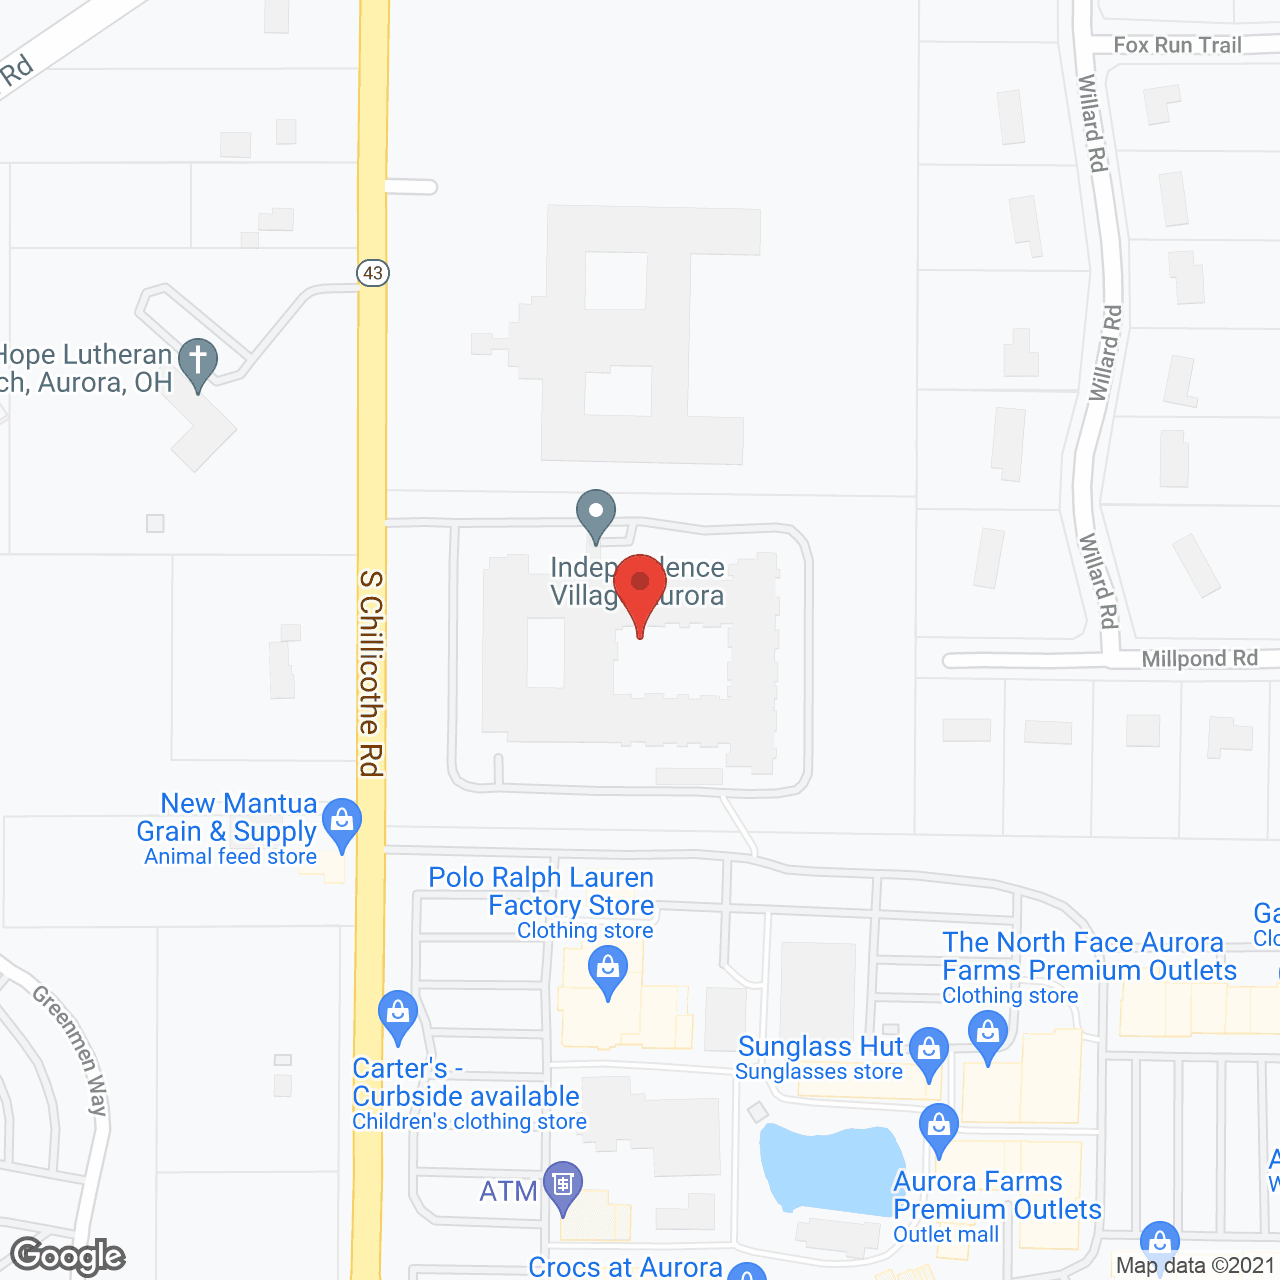 Independence Village of Aurora in google map